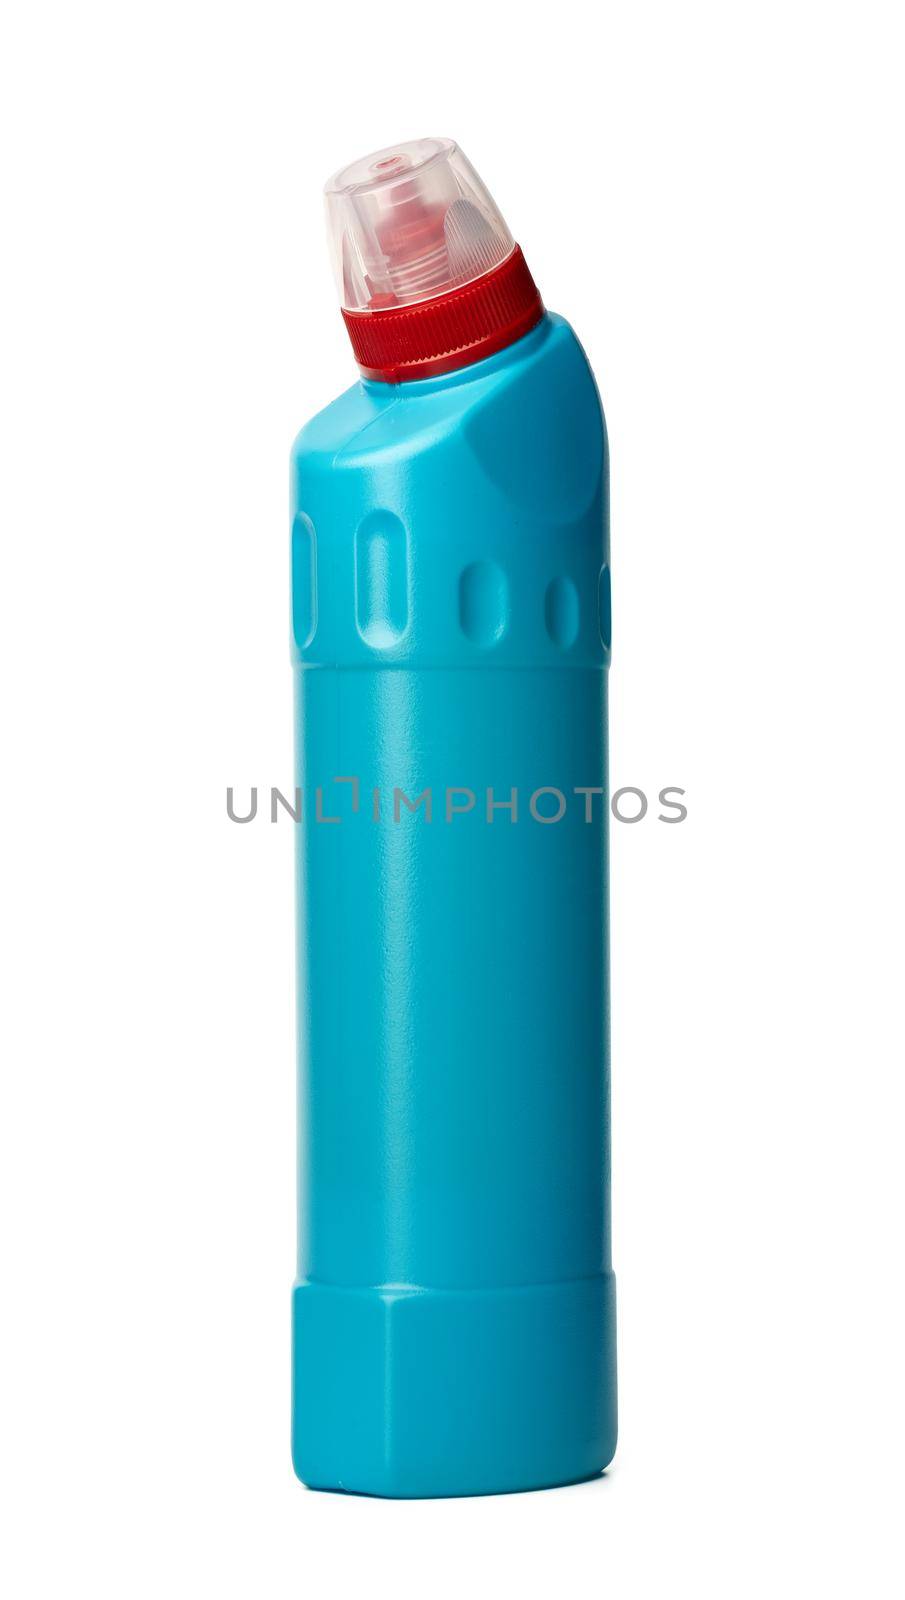 Blue plastic bottle of liquid detergent isolated on white background